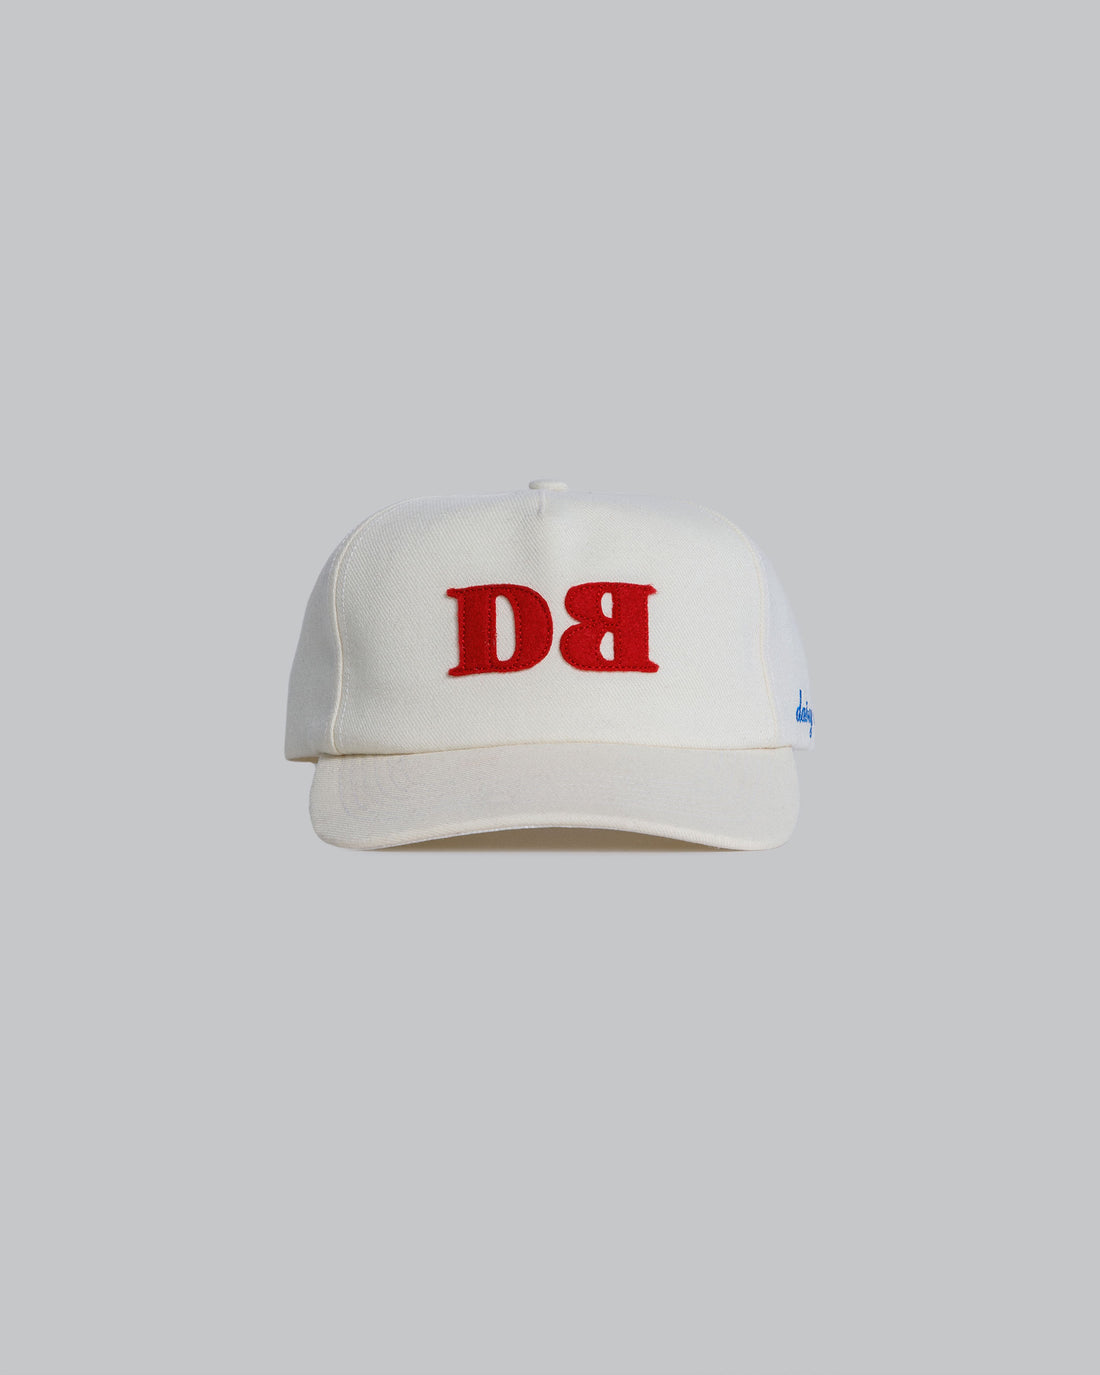 DB Wool Hat - Cream